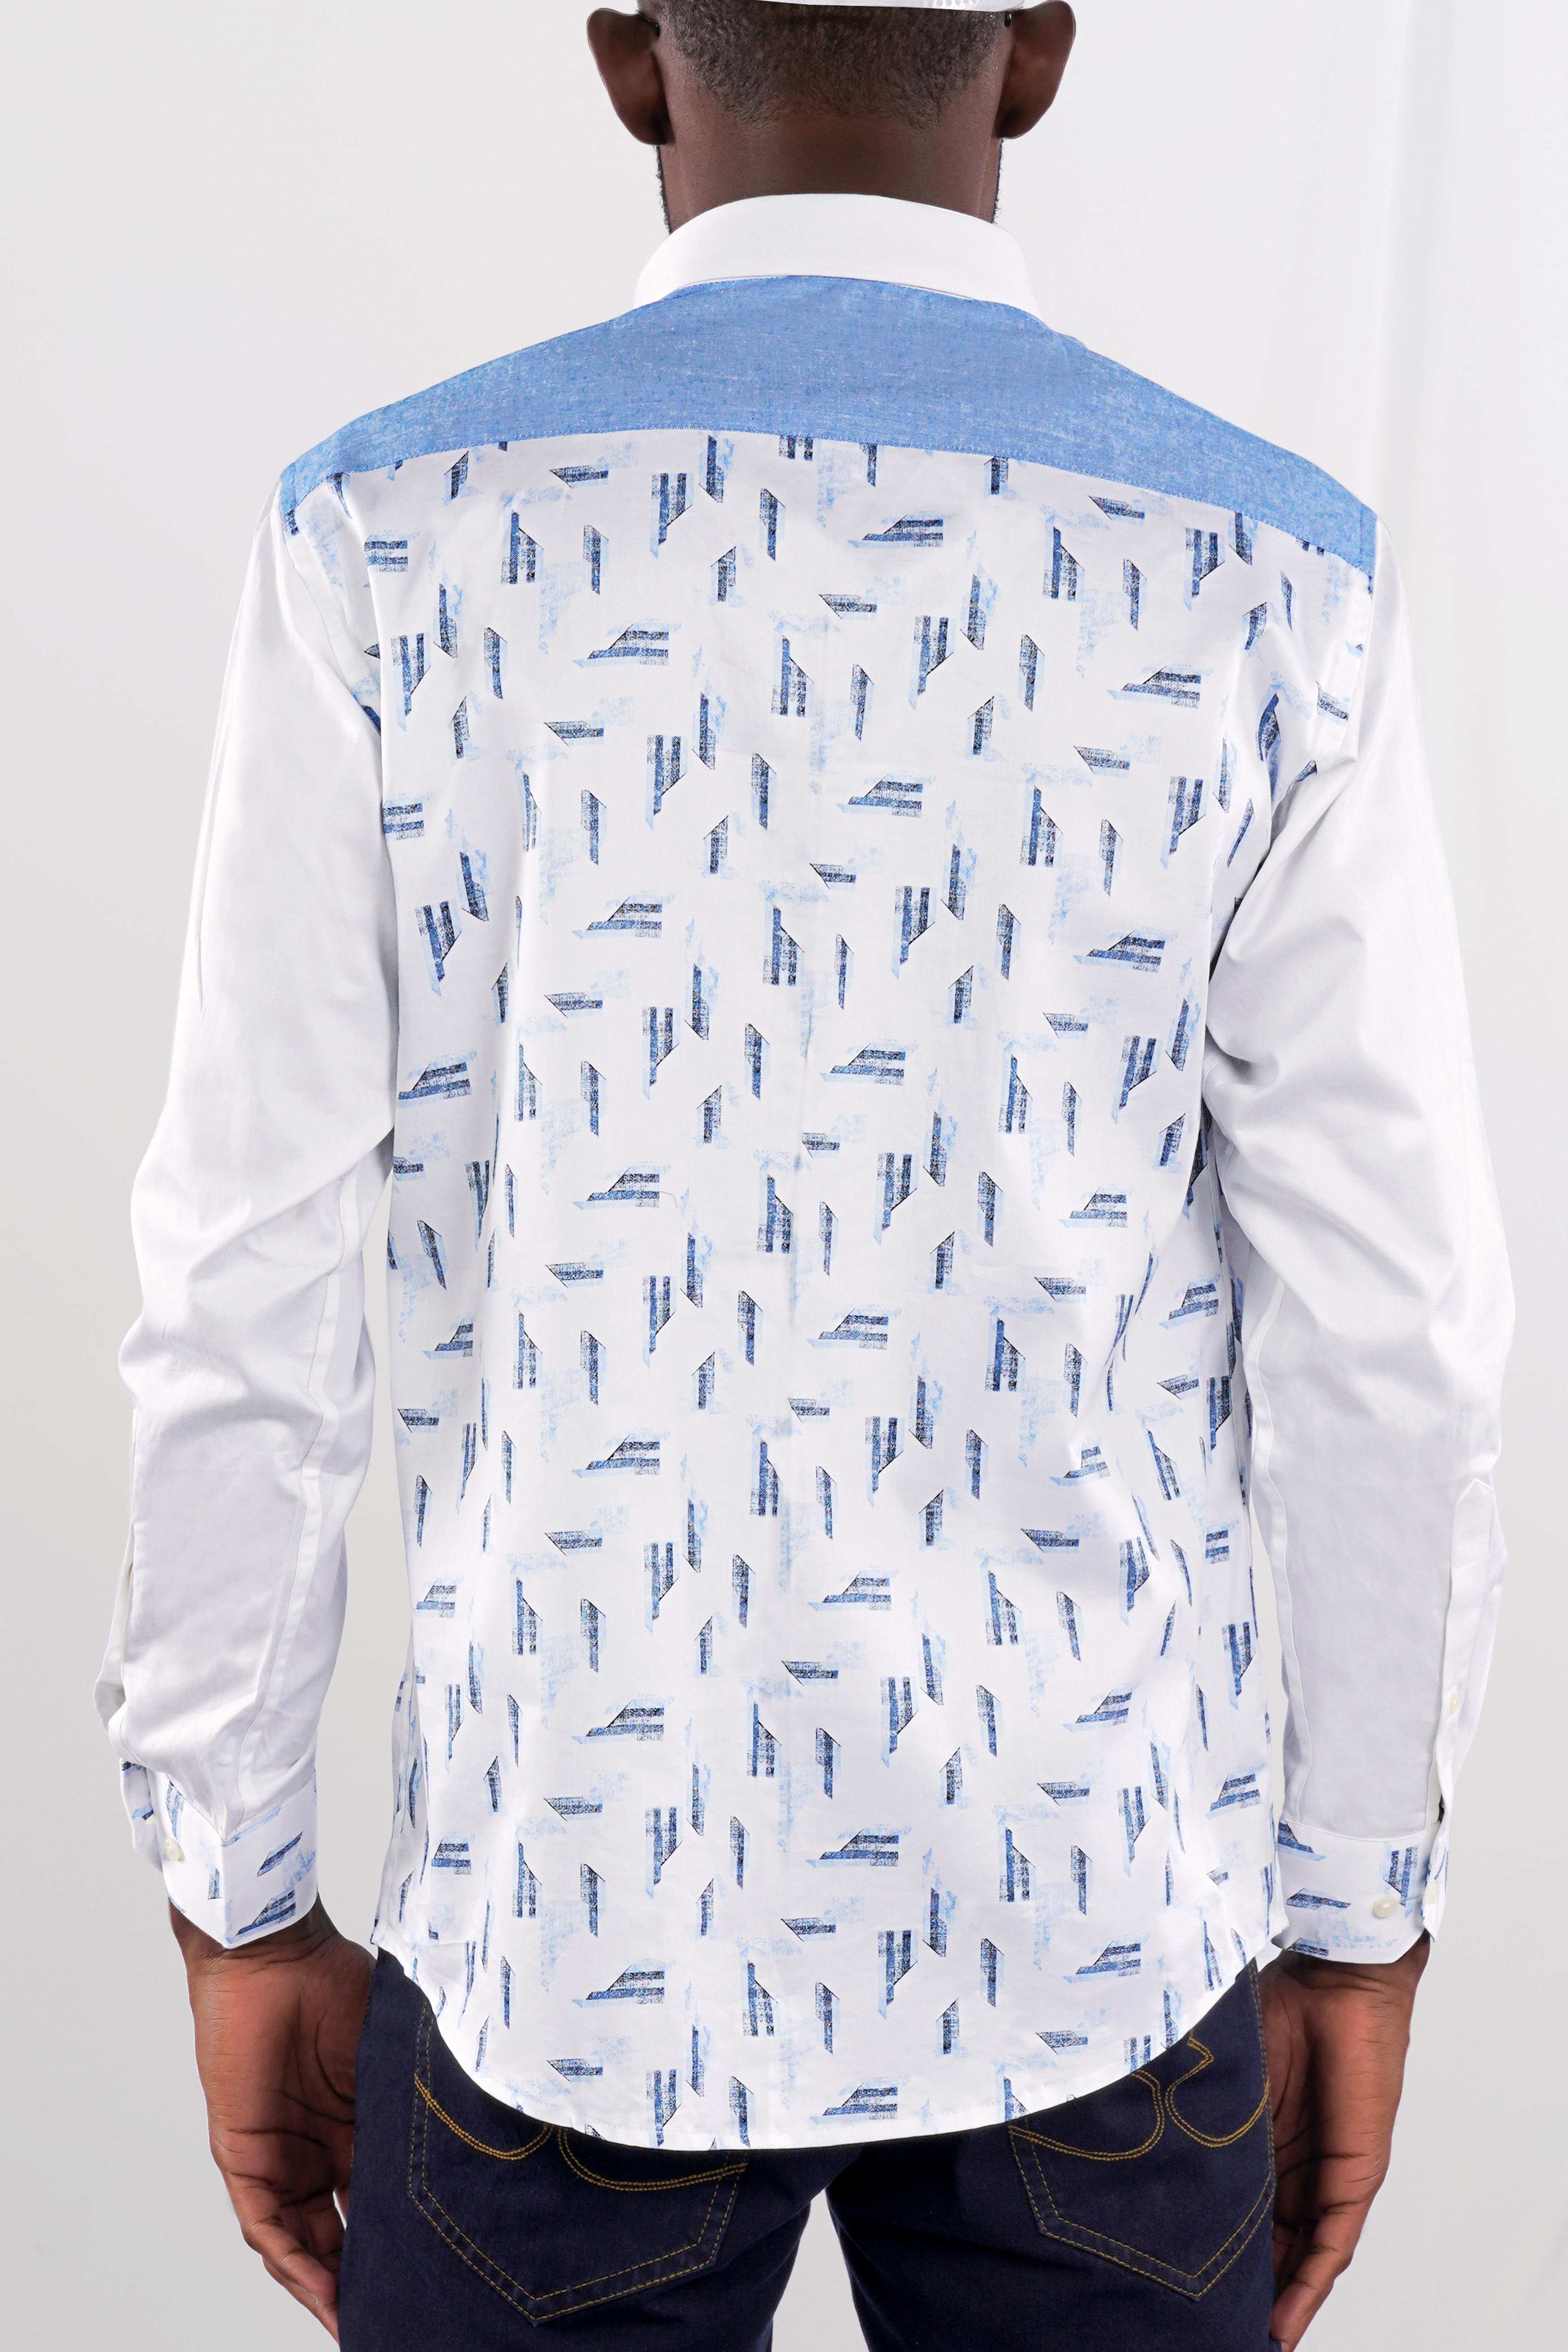 Bright White and Jordy Blue Printed Super Soft Premium Cotton Designer Shirt